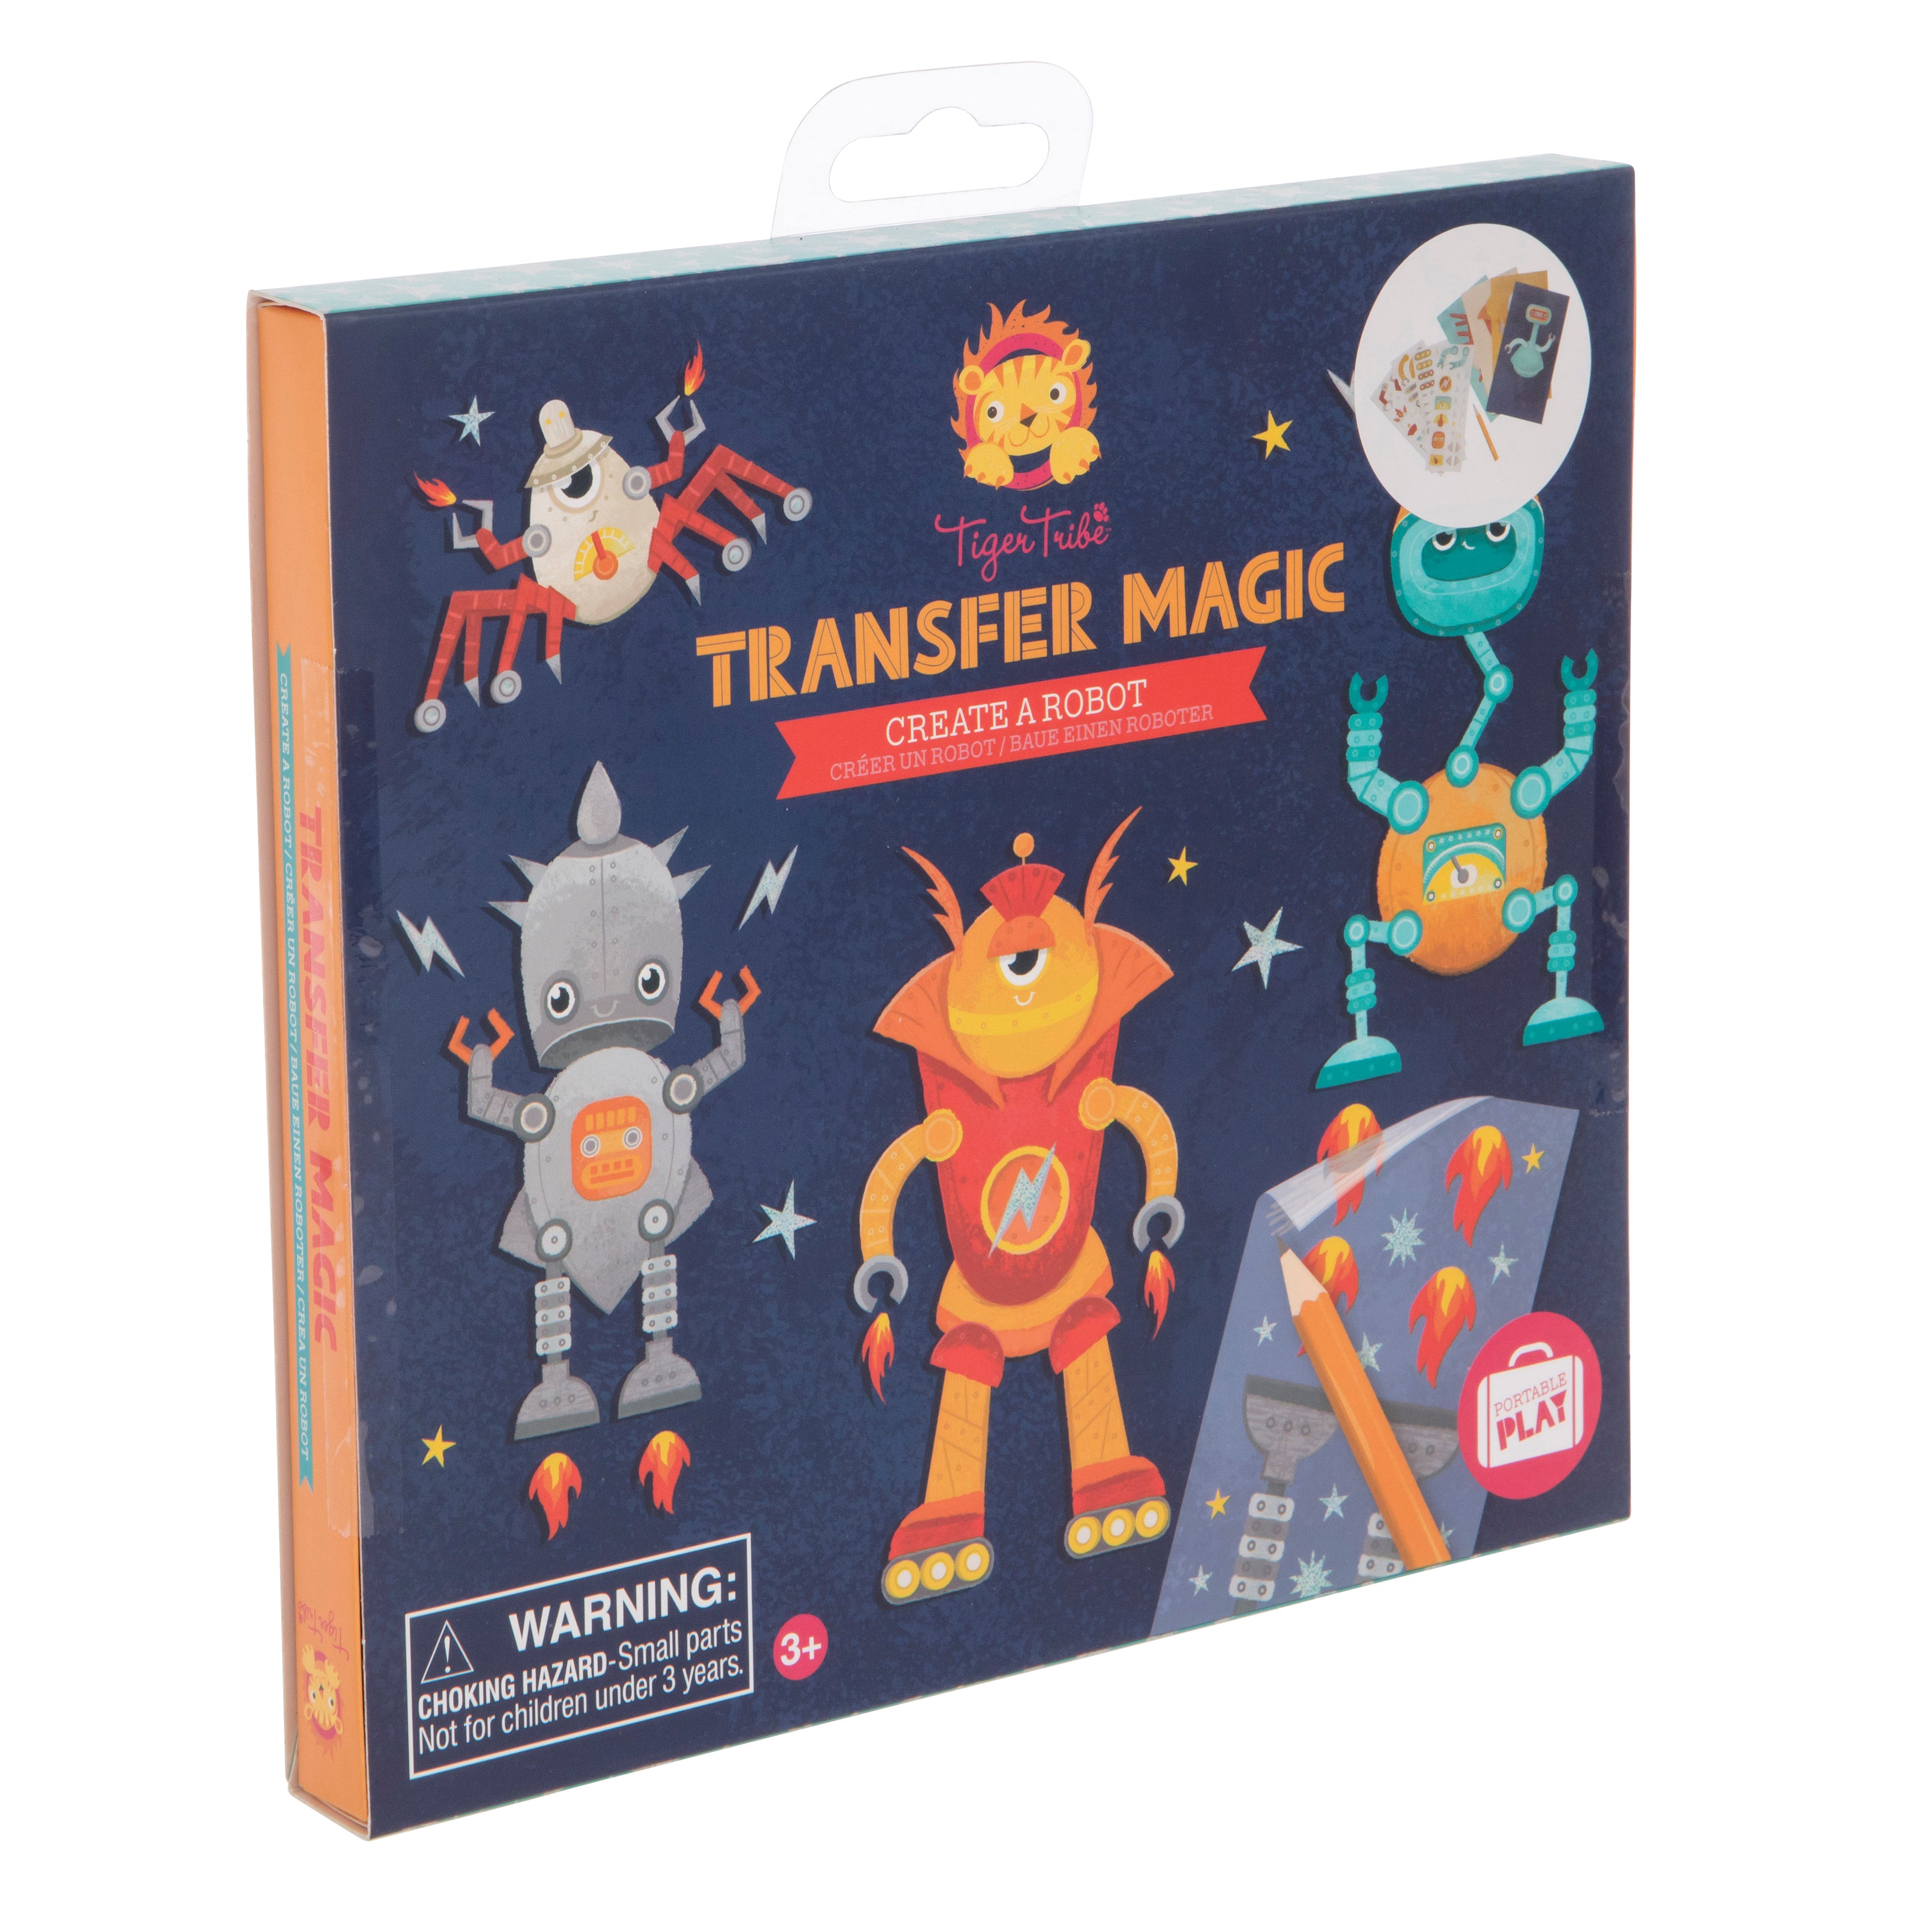 Tiger Tribe Transfer Magic – Create a Robot